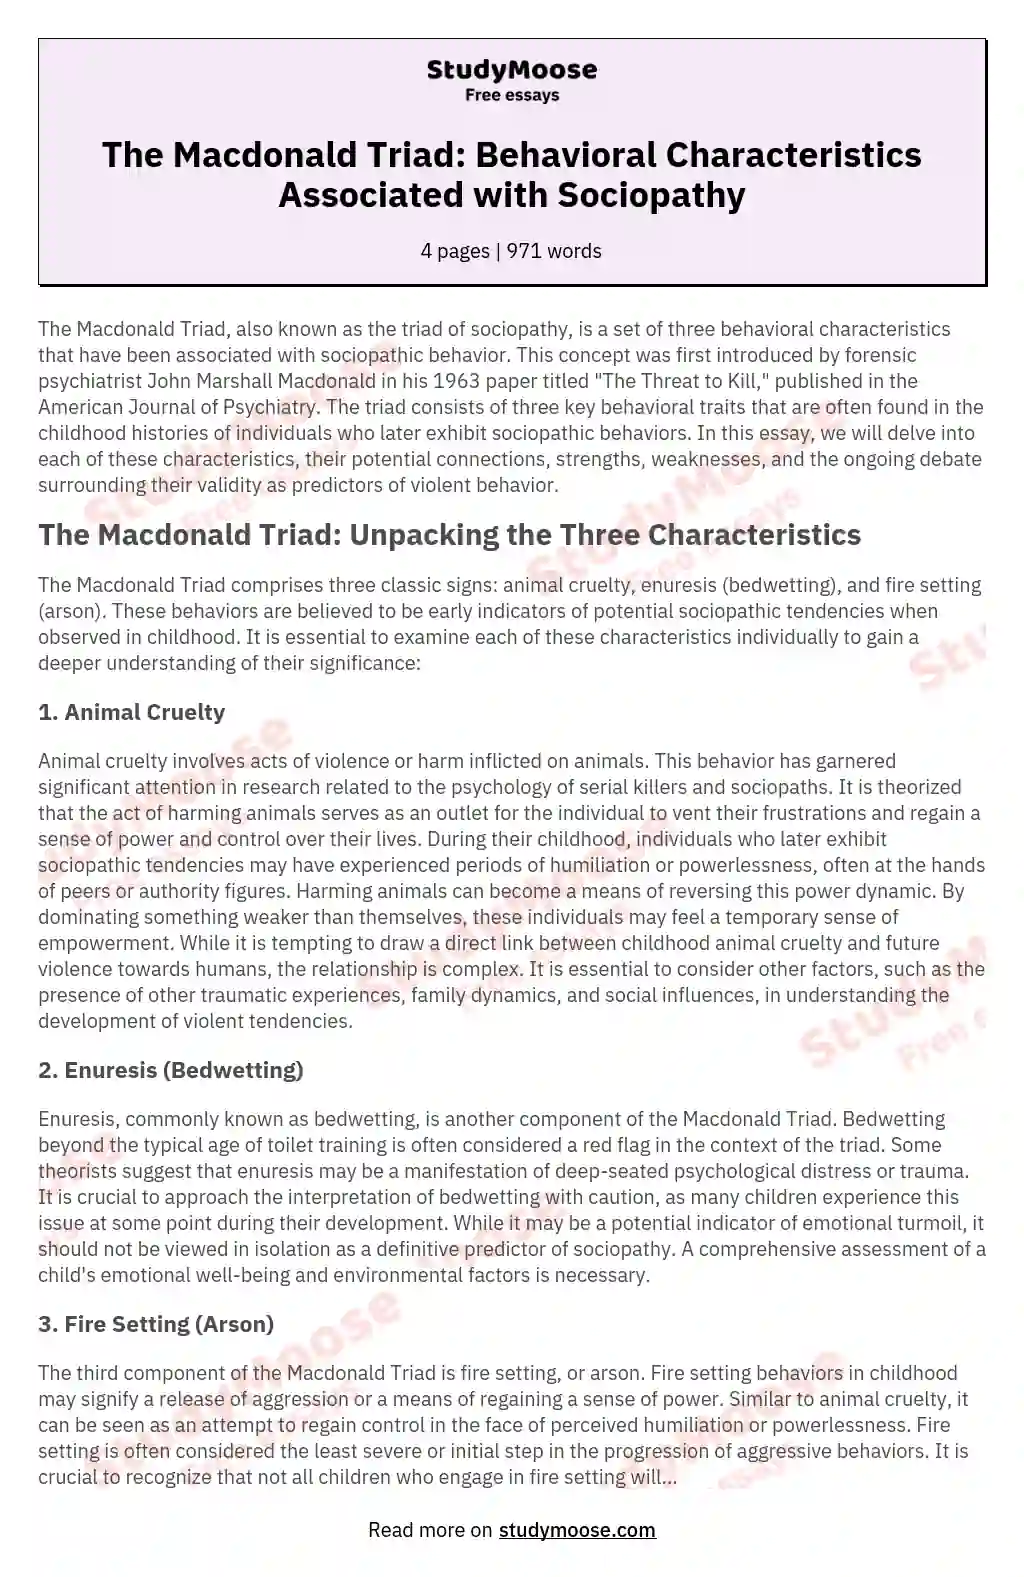 The Macdonald Triad: Behavioral Characteristics Associated with Sociopathy essay